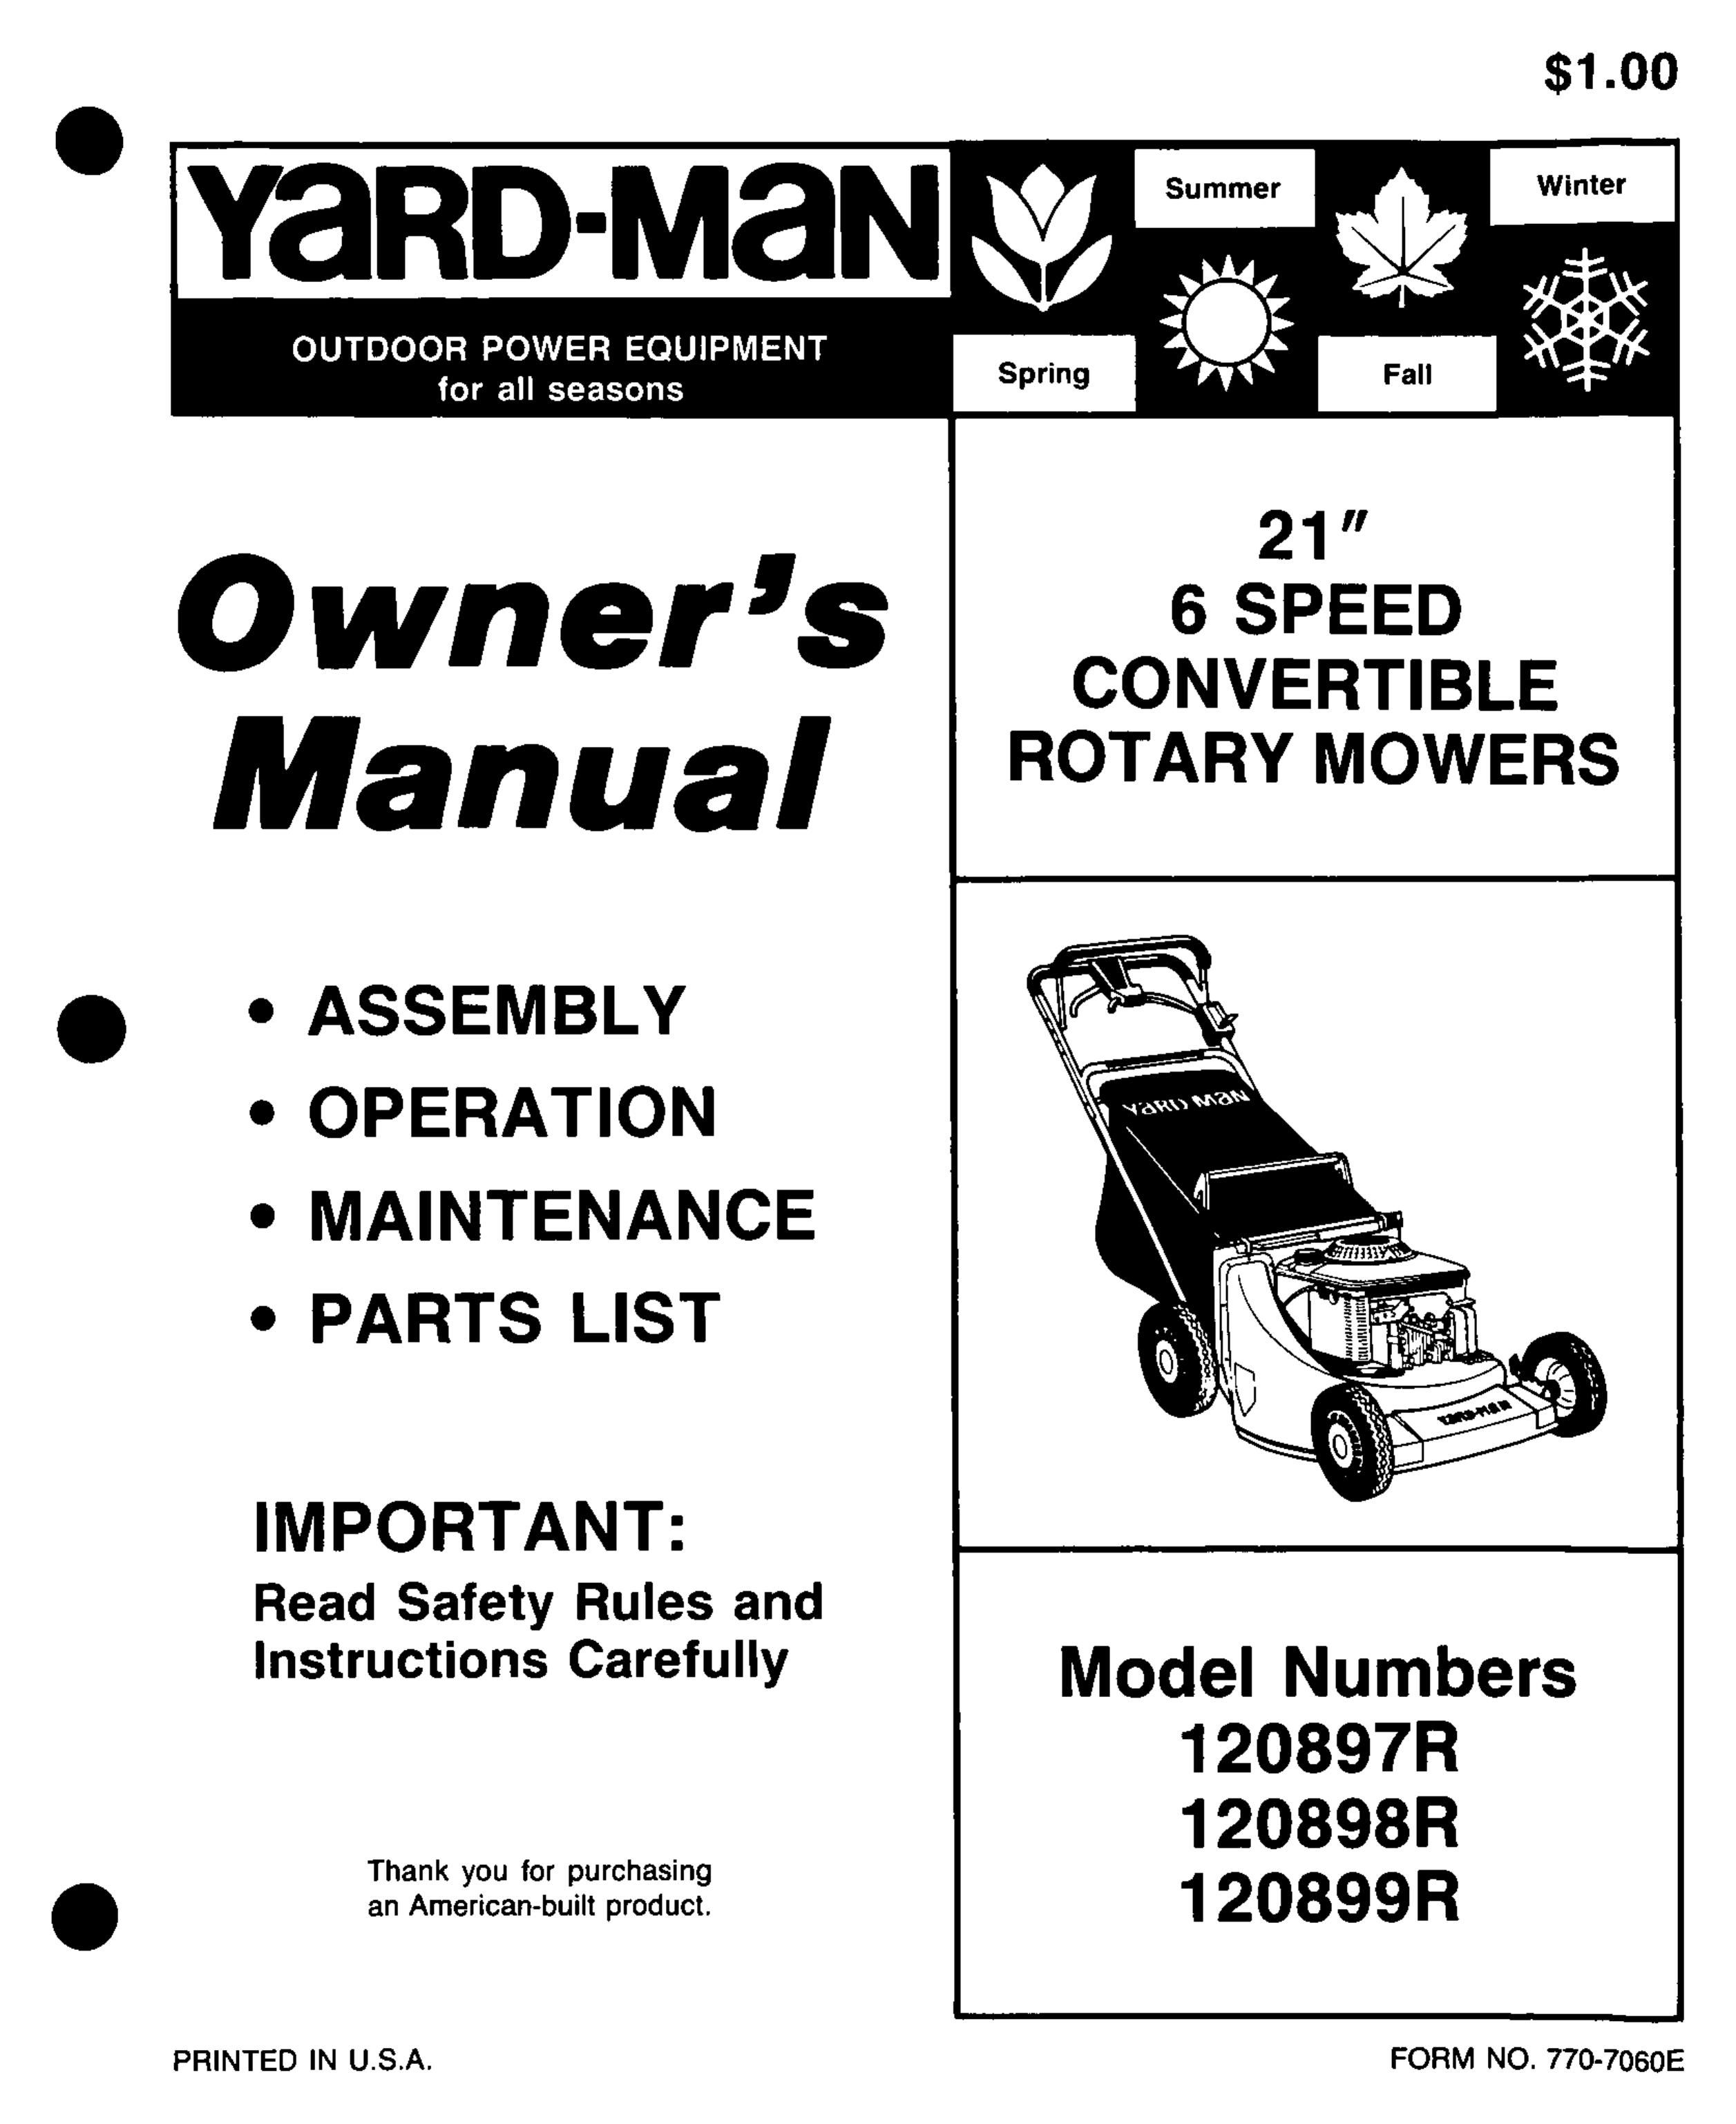 Yard-Man 120899R Lawn Mower User Manual